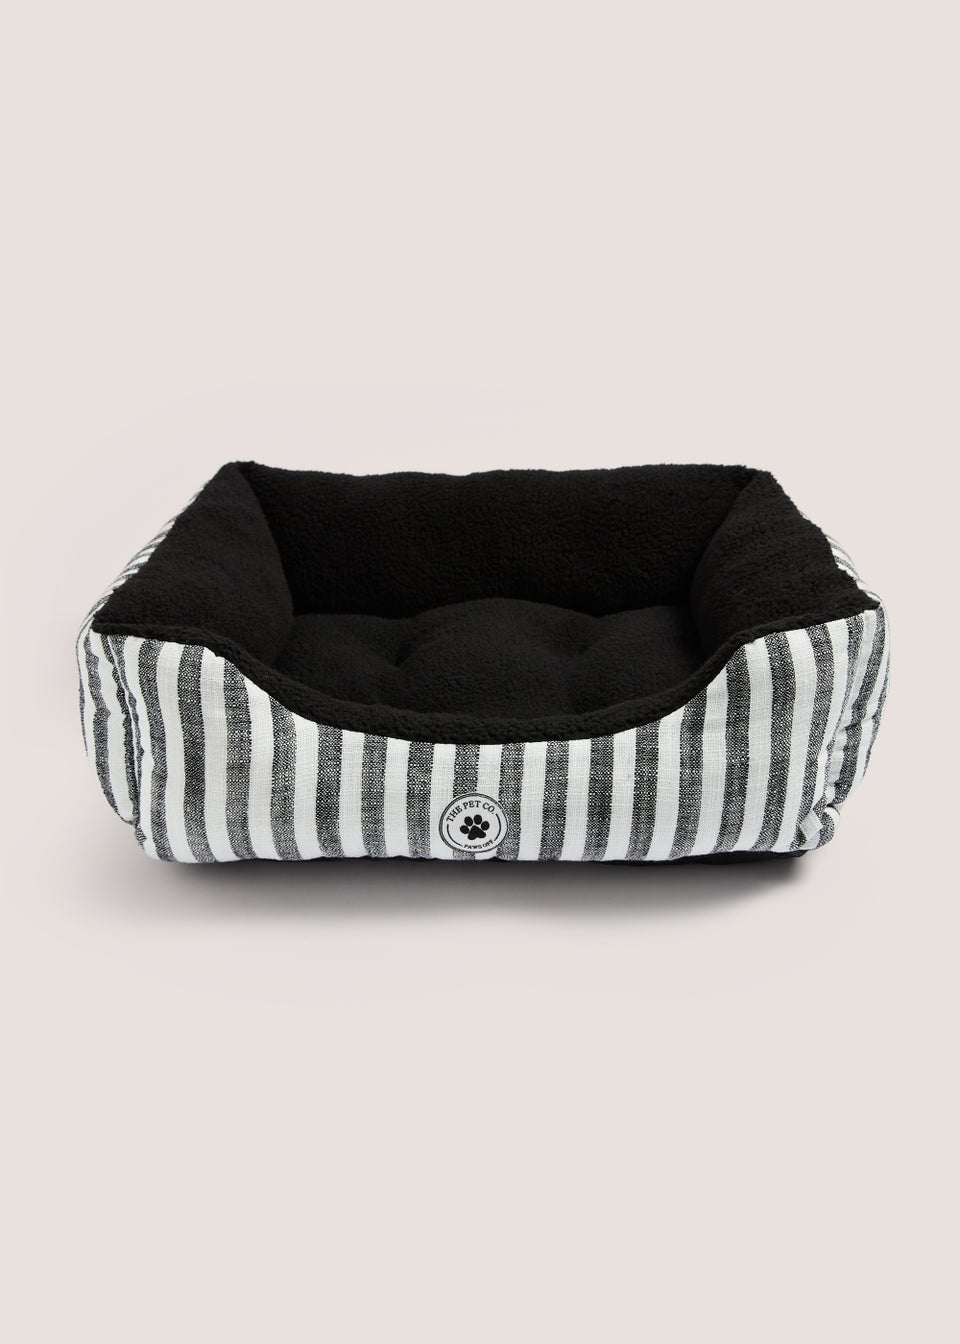 Monochrome Stripe Pet Bed (Small-Medium)